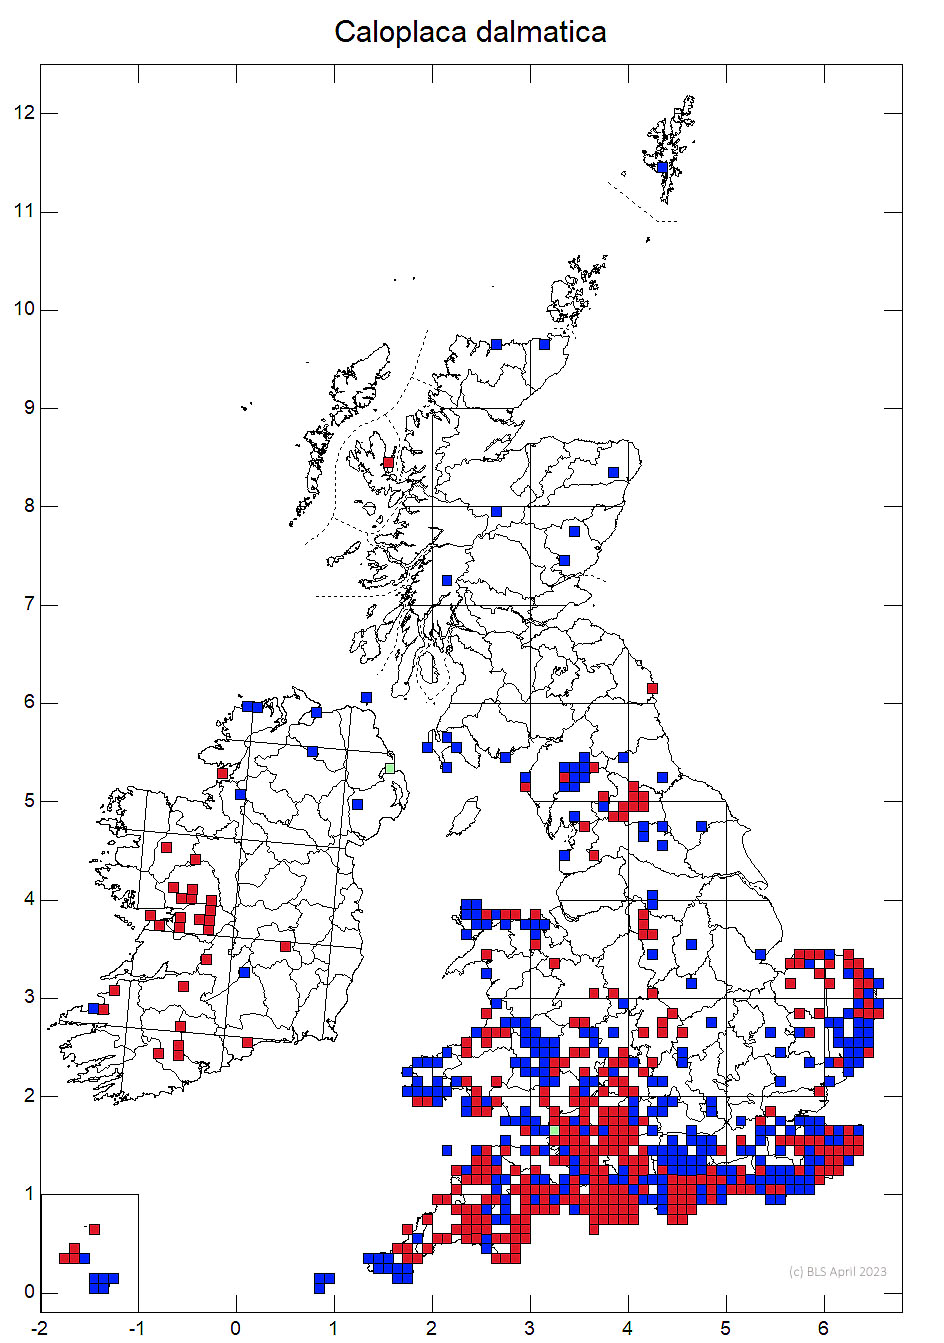 Caloplaca dalmatica 10km sq distribution map